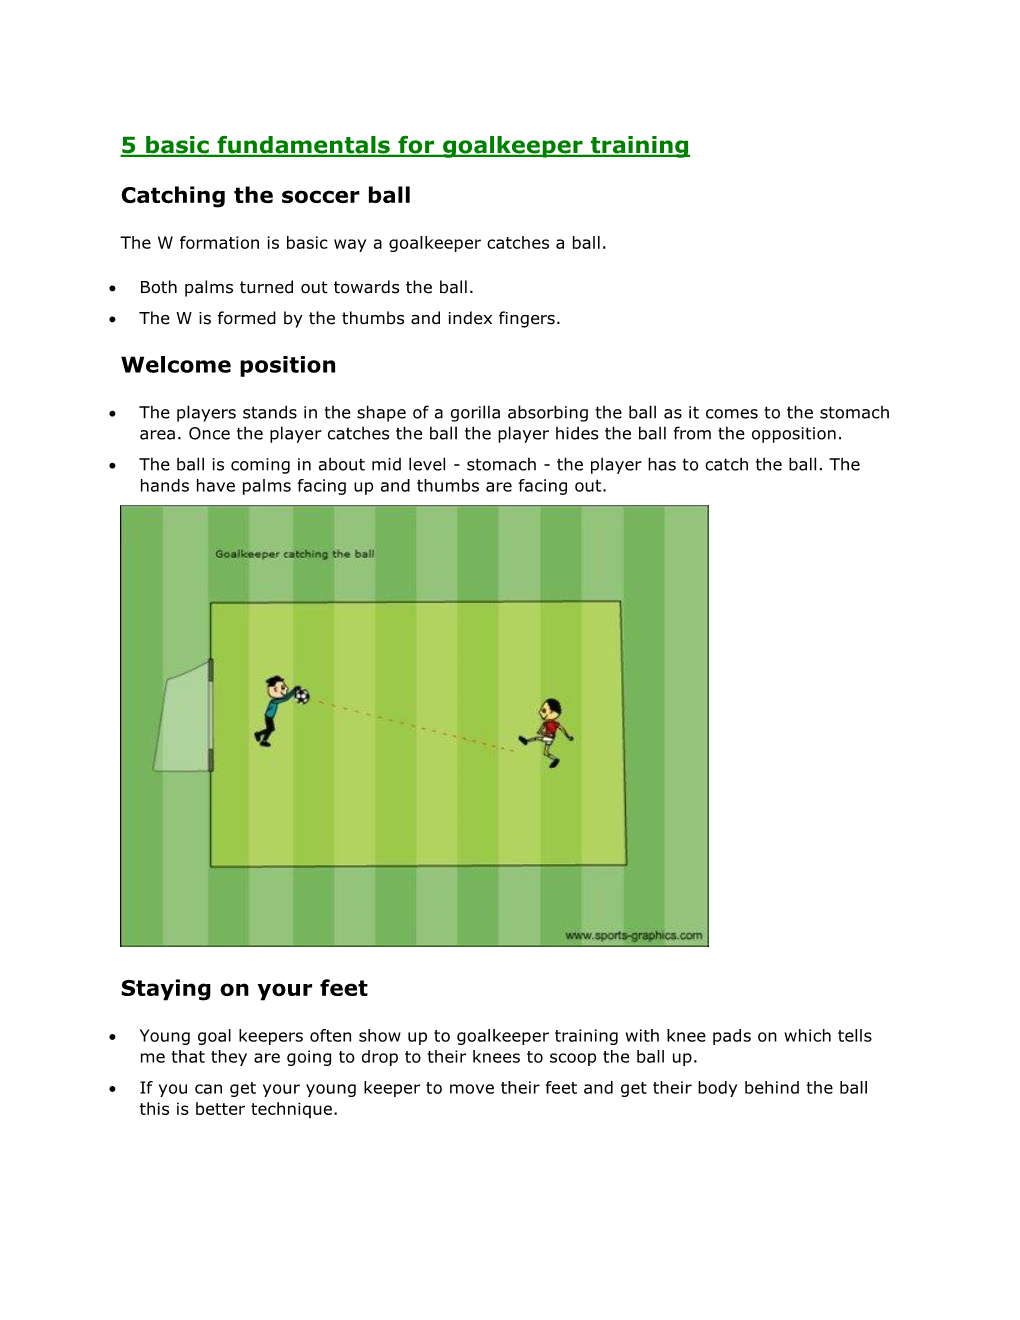 5 Basic Fundamentals for Goalkeeper Training